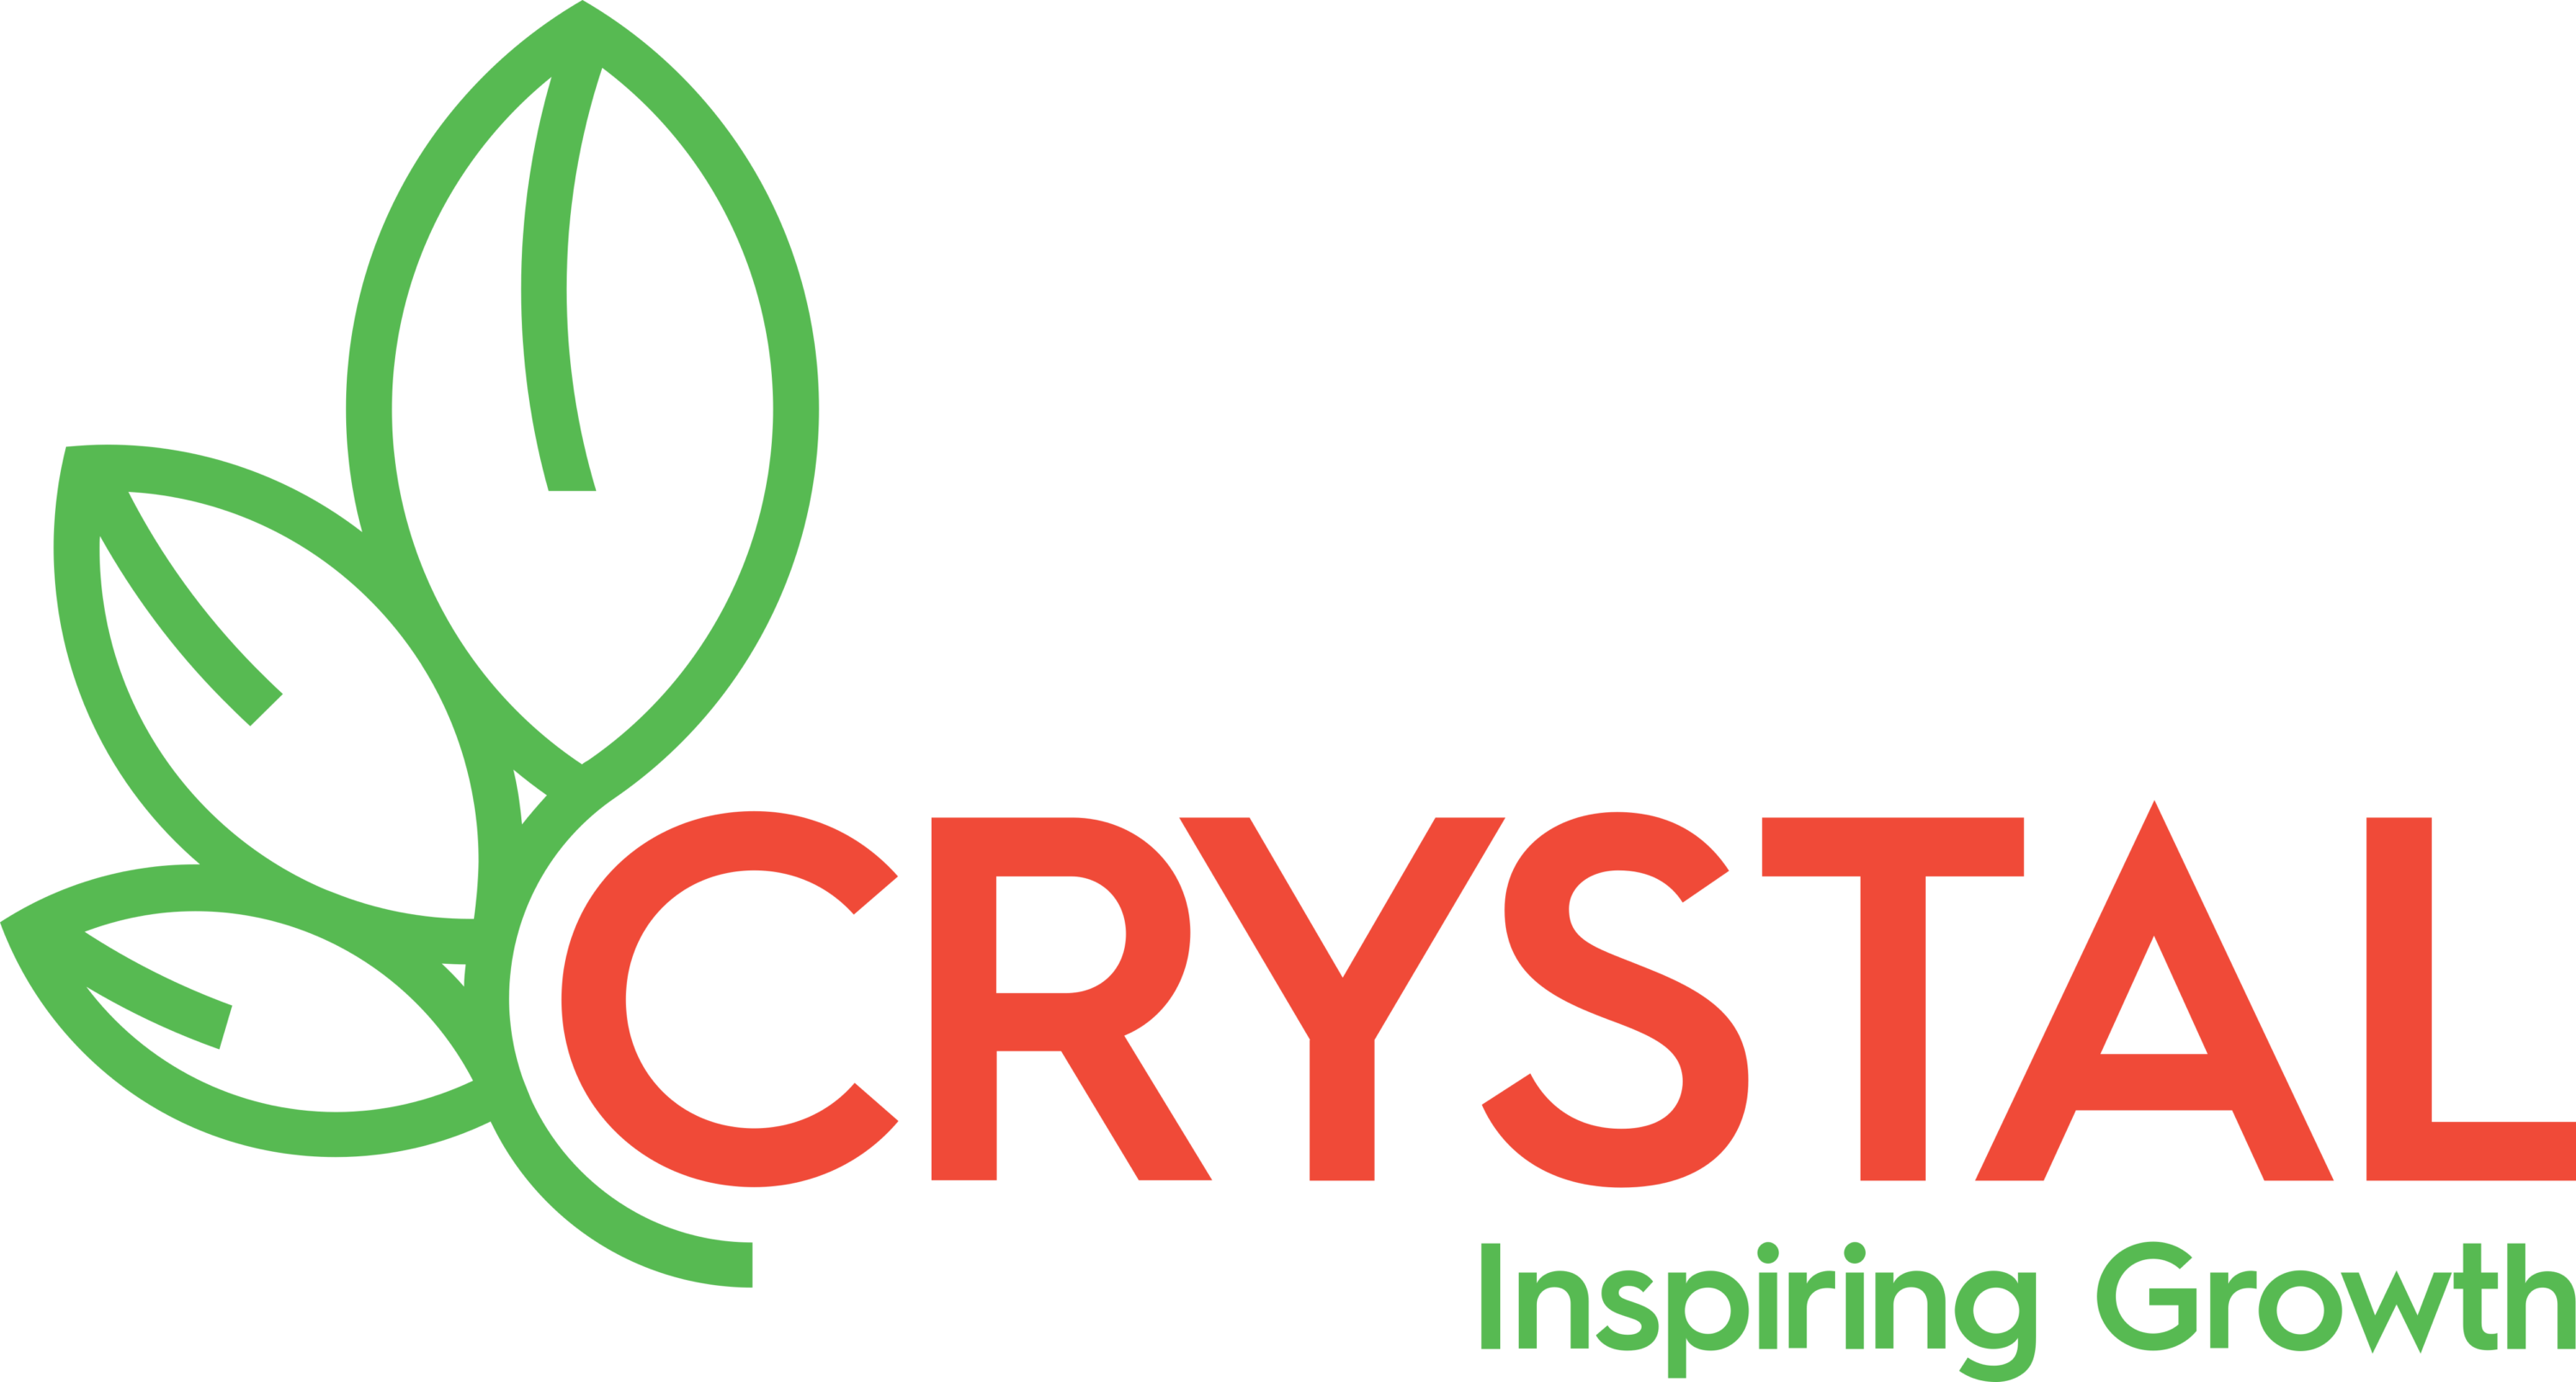 Crystal Crop Protection Logo